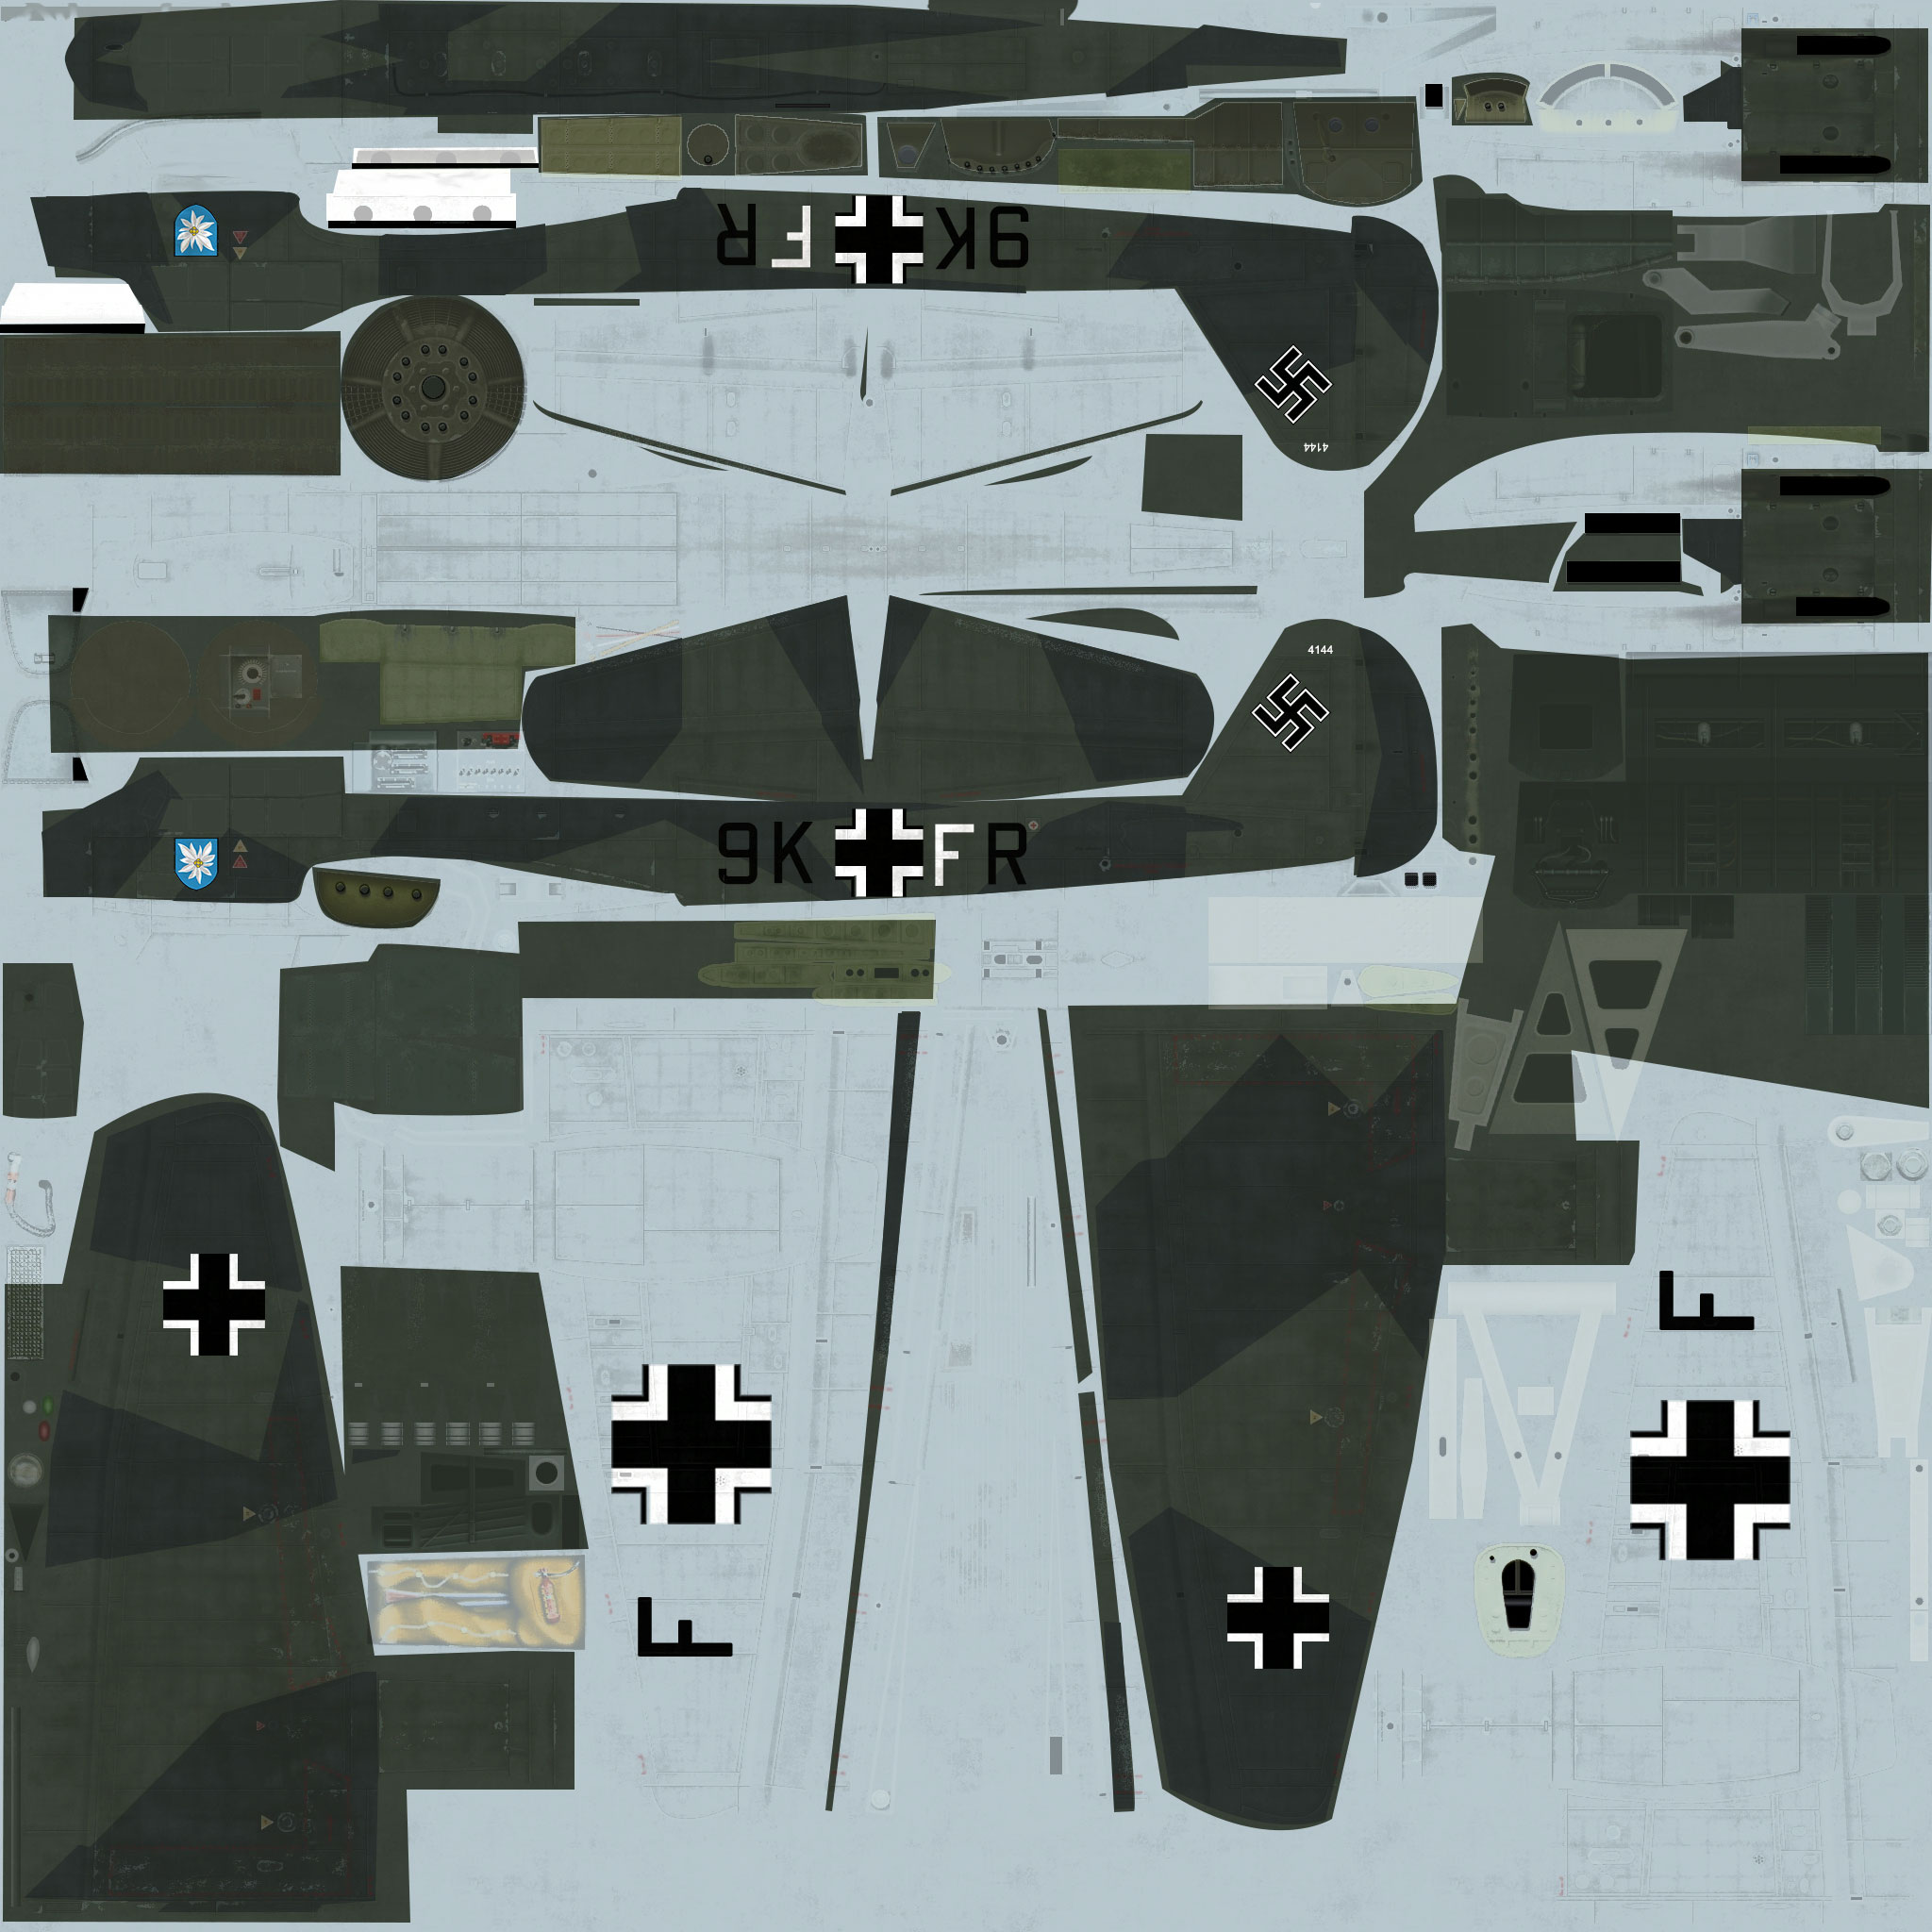 COD asisbiz Ju 88A 7.KG51 9K+FR WNr 4144 Battle of Britain 1940 41